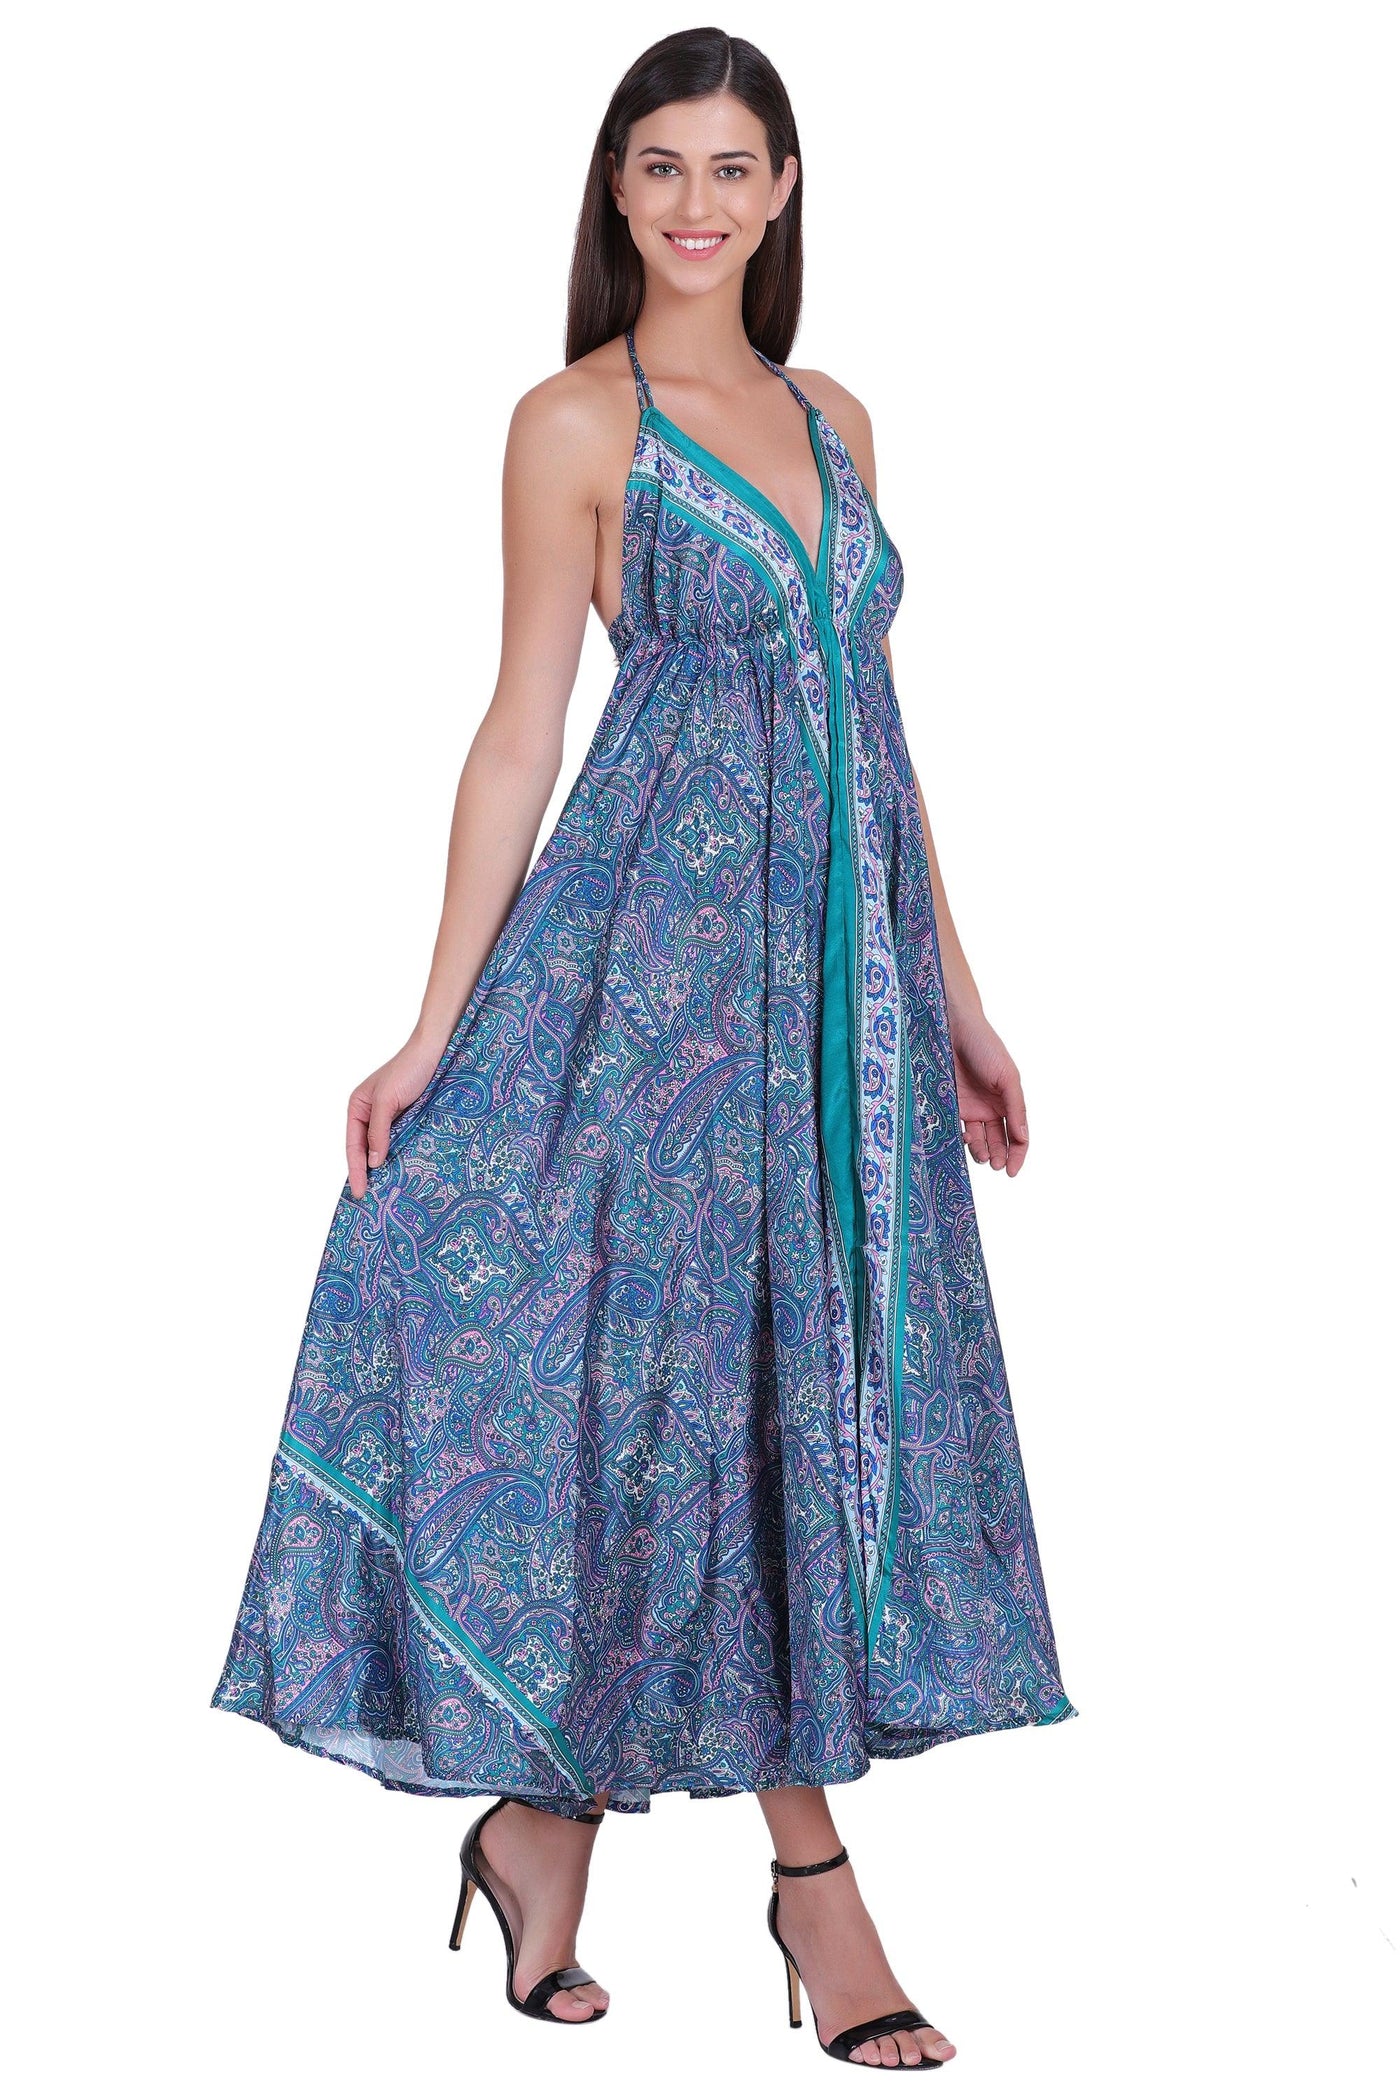 Paisley Printed Silk Dress AB23001  - Advance Apparels Inc